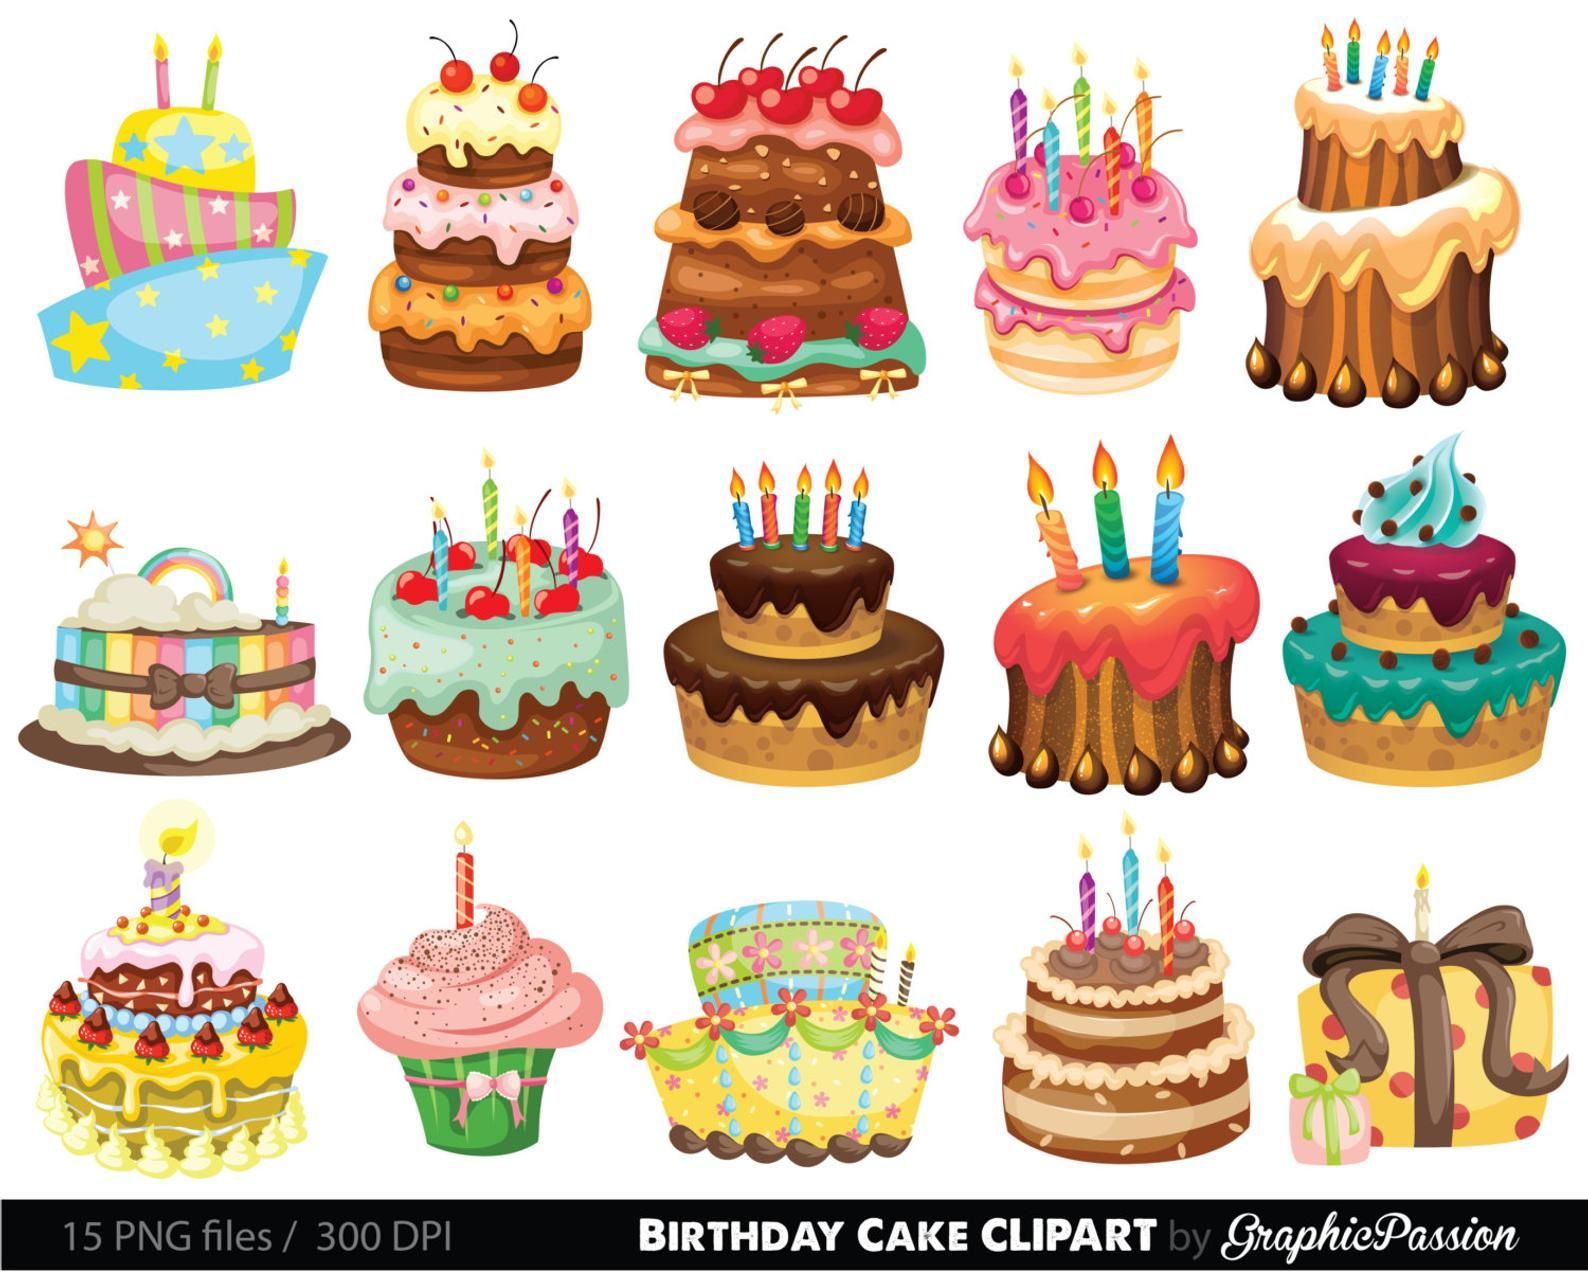 Birthday Cake Clipart. Cake Illustration. Birthday Cake Digital Images. Colorful Birthday Cake Clipart -   15 cake Illustration illustrators ideas